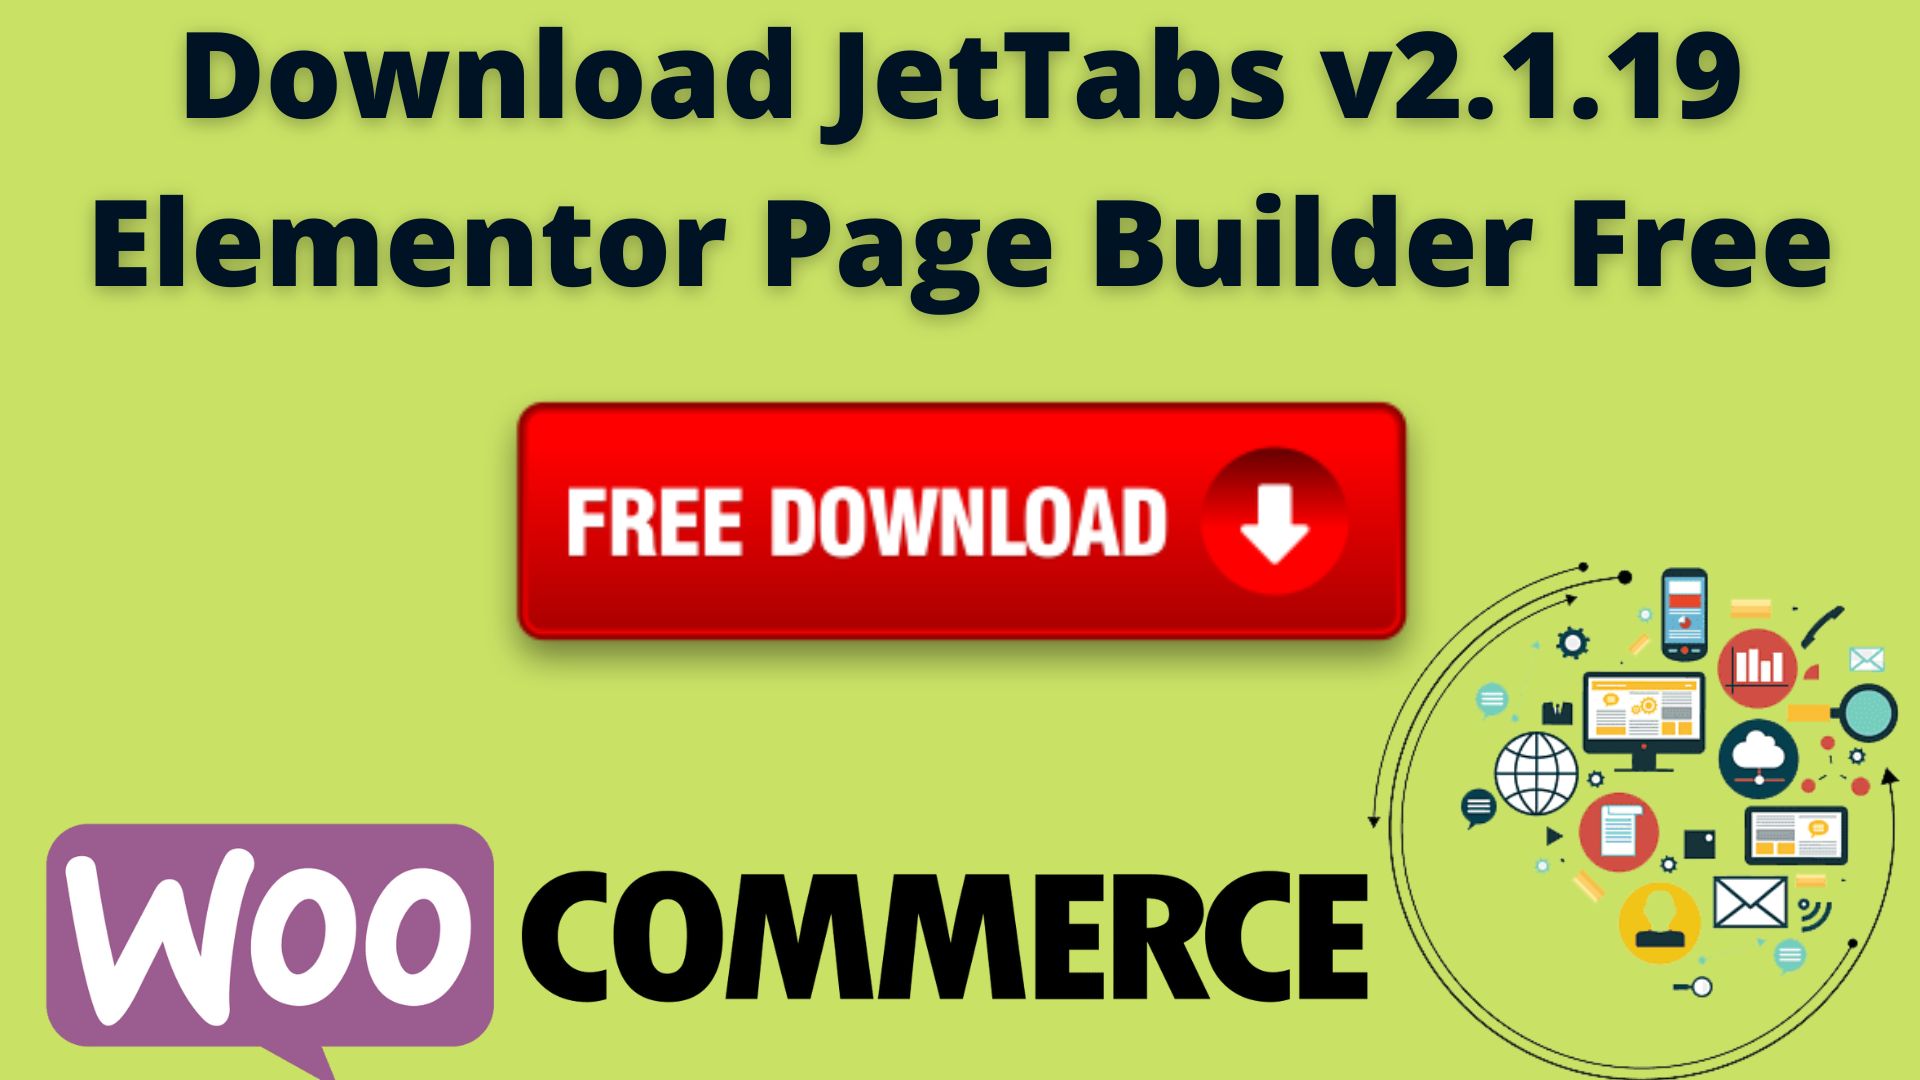 Download Jettabs V2.1.19 Elementor Page Builder Free